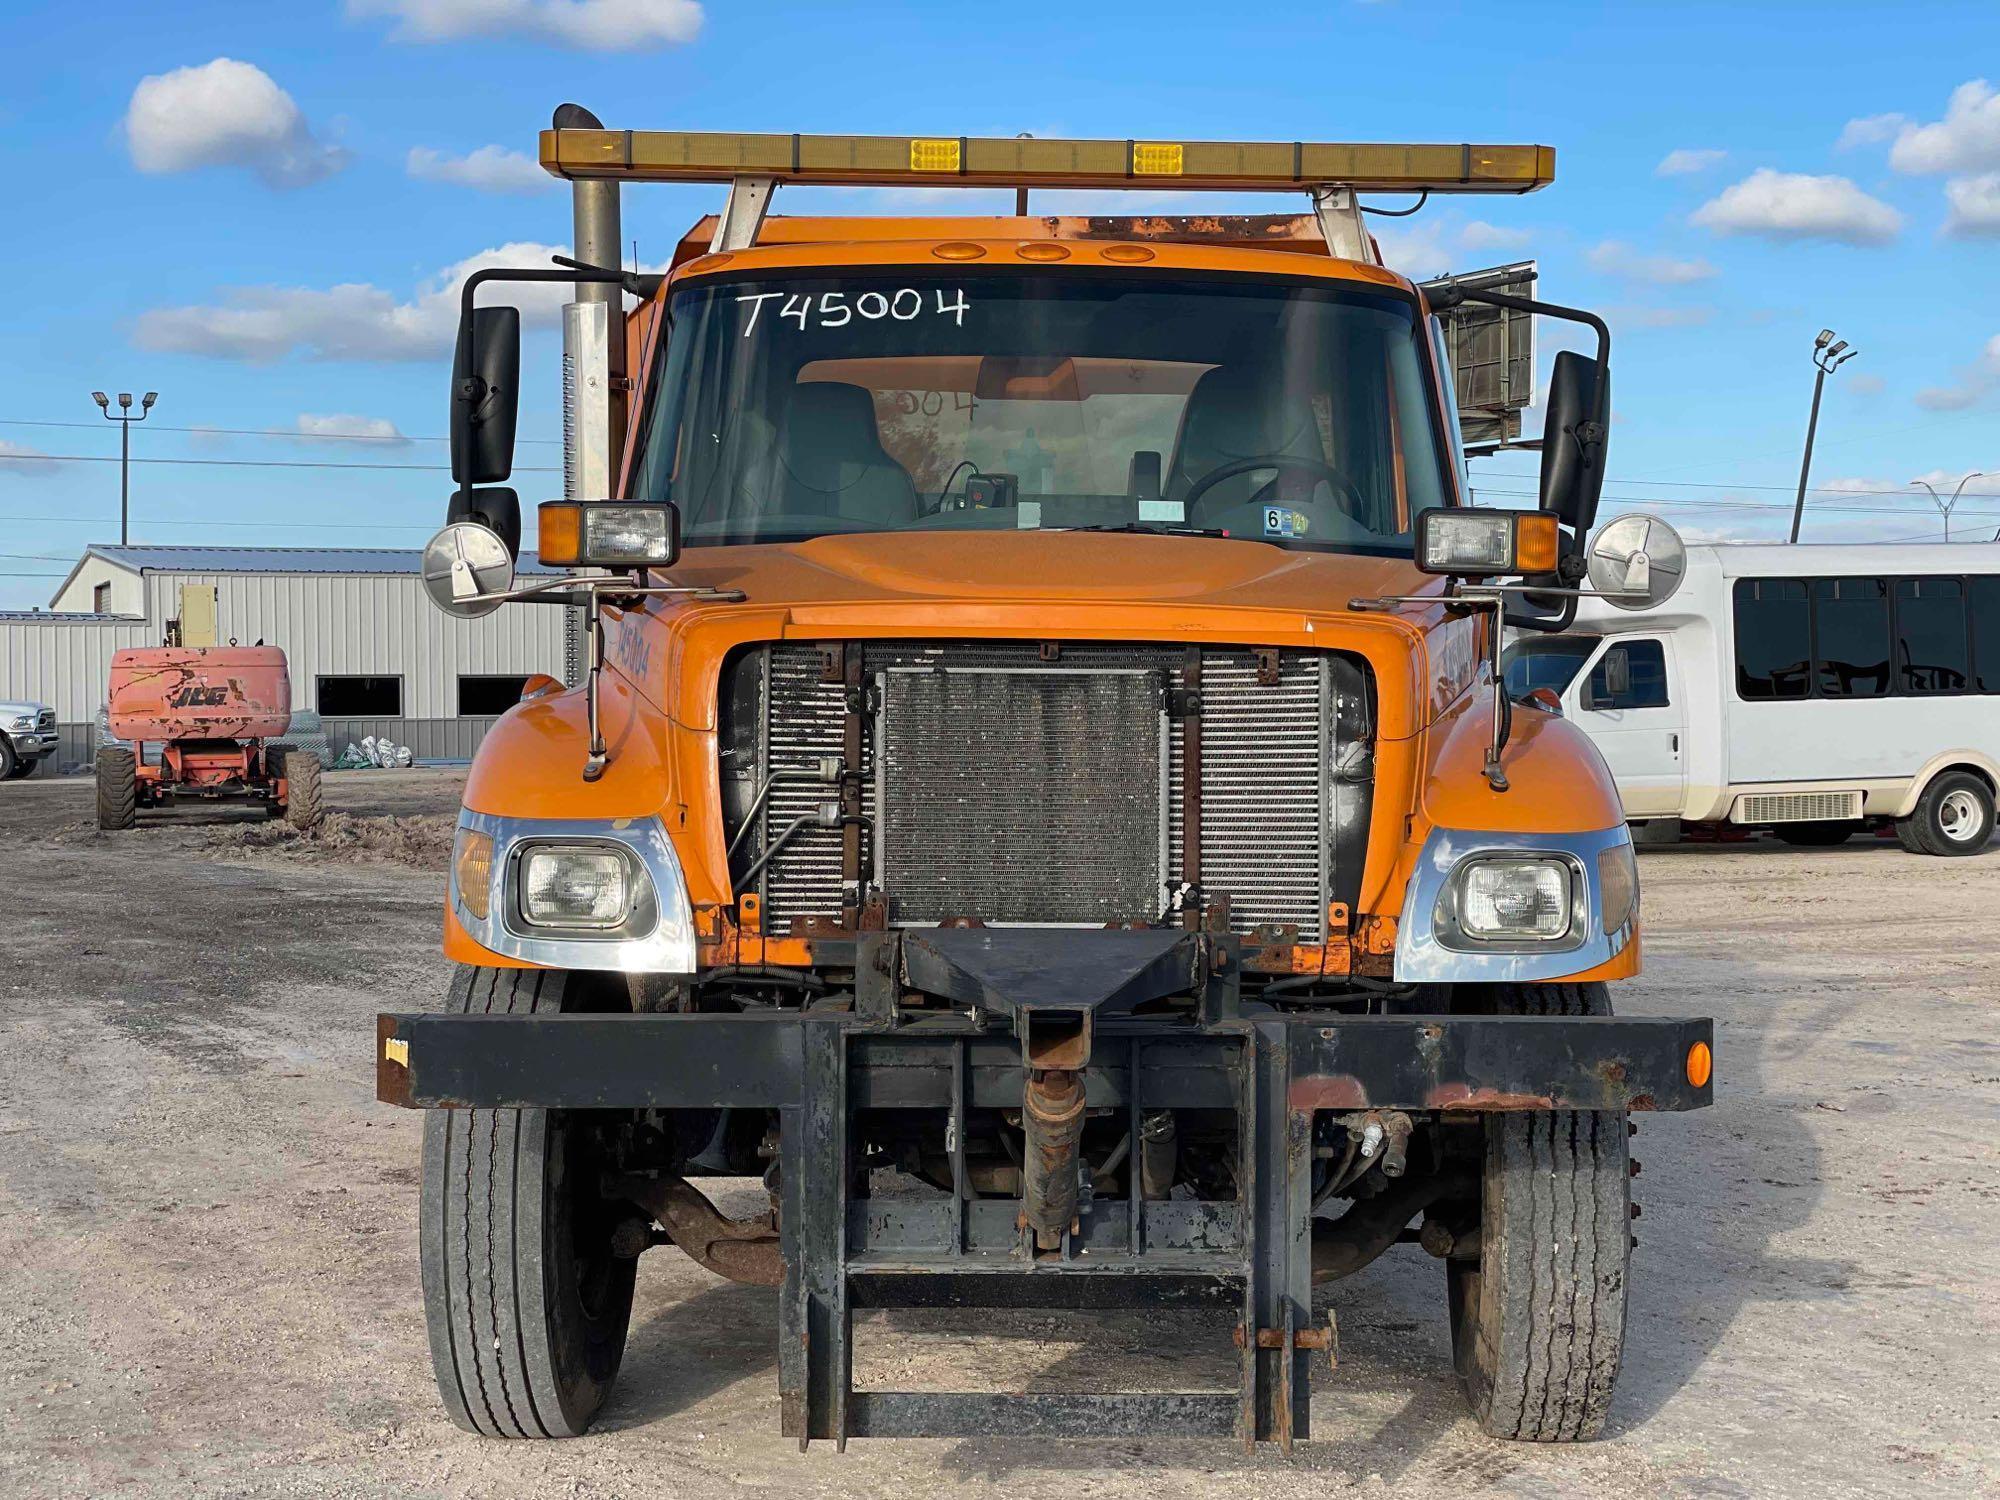 2007 International 7400 SFA Dump Truck